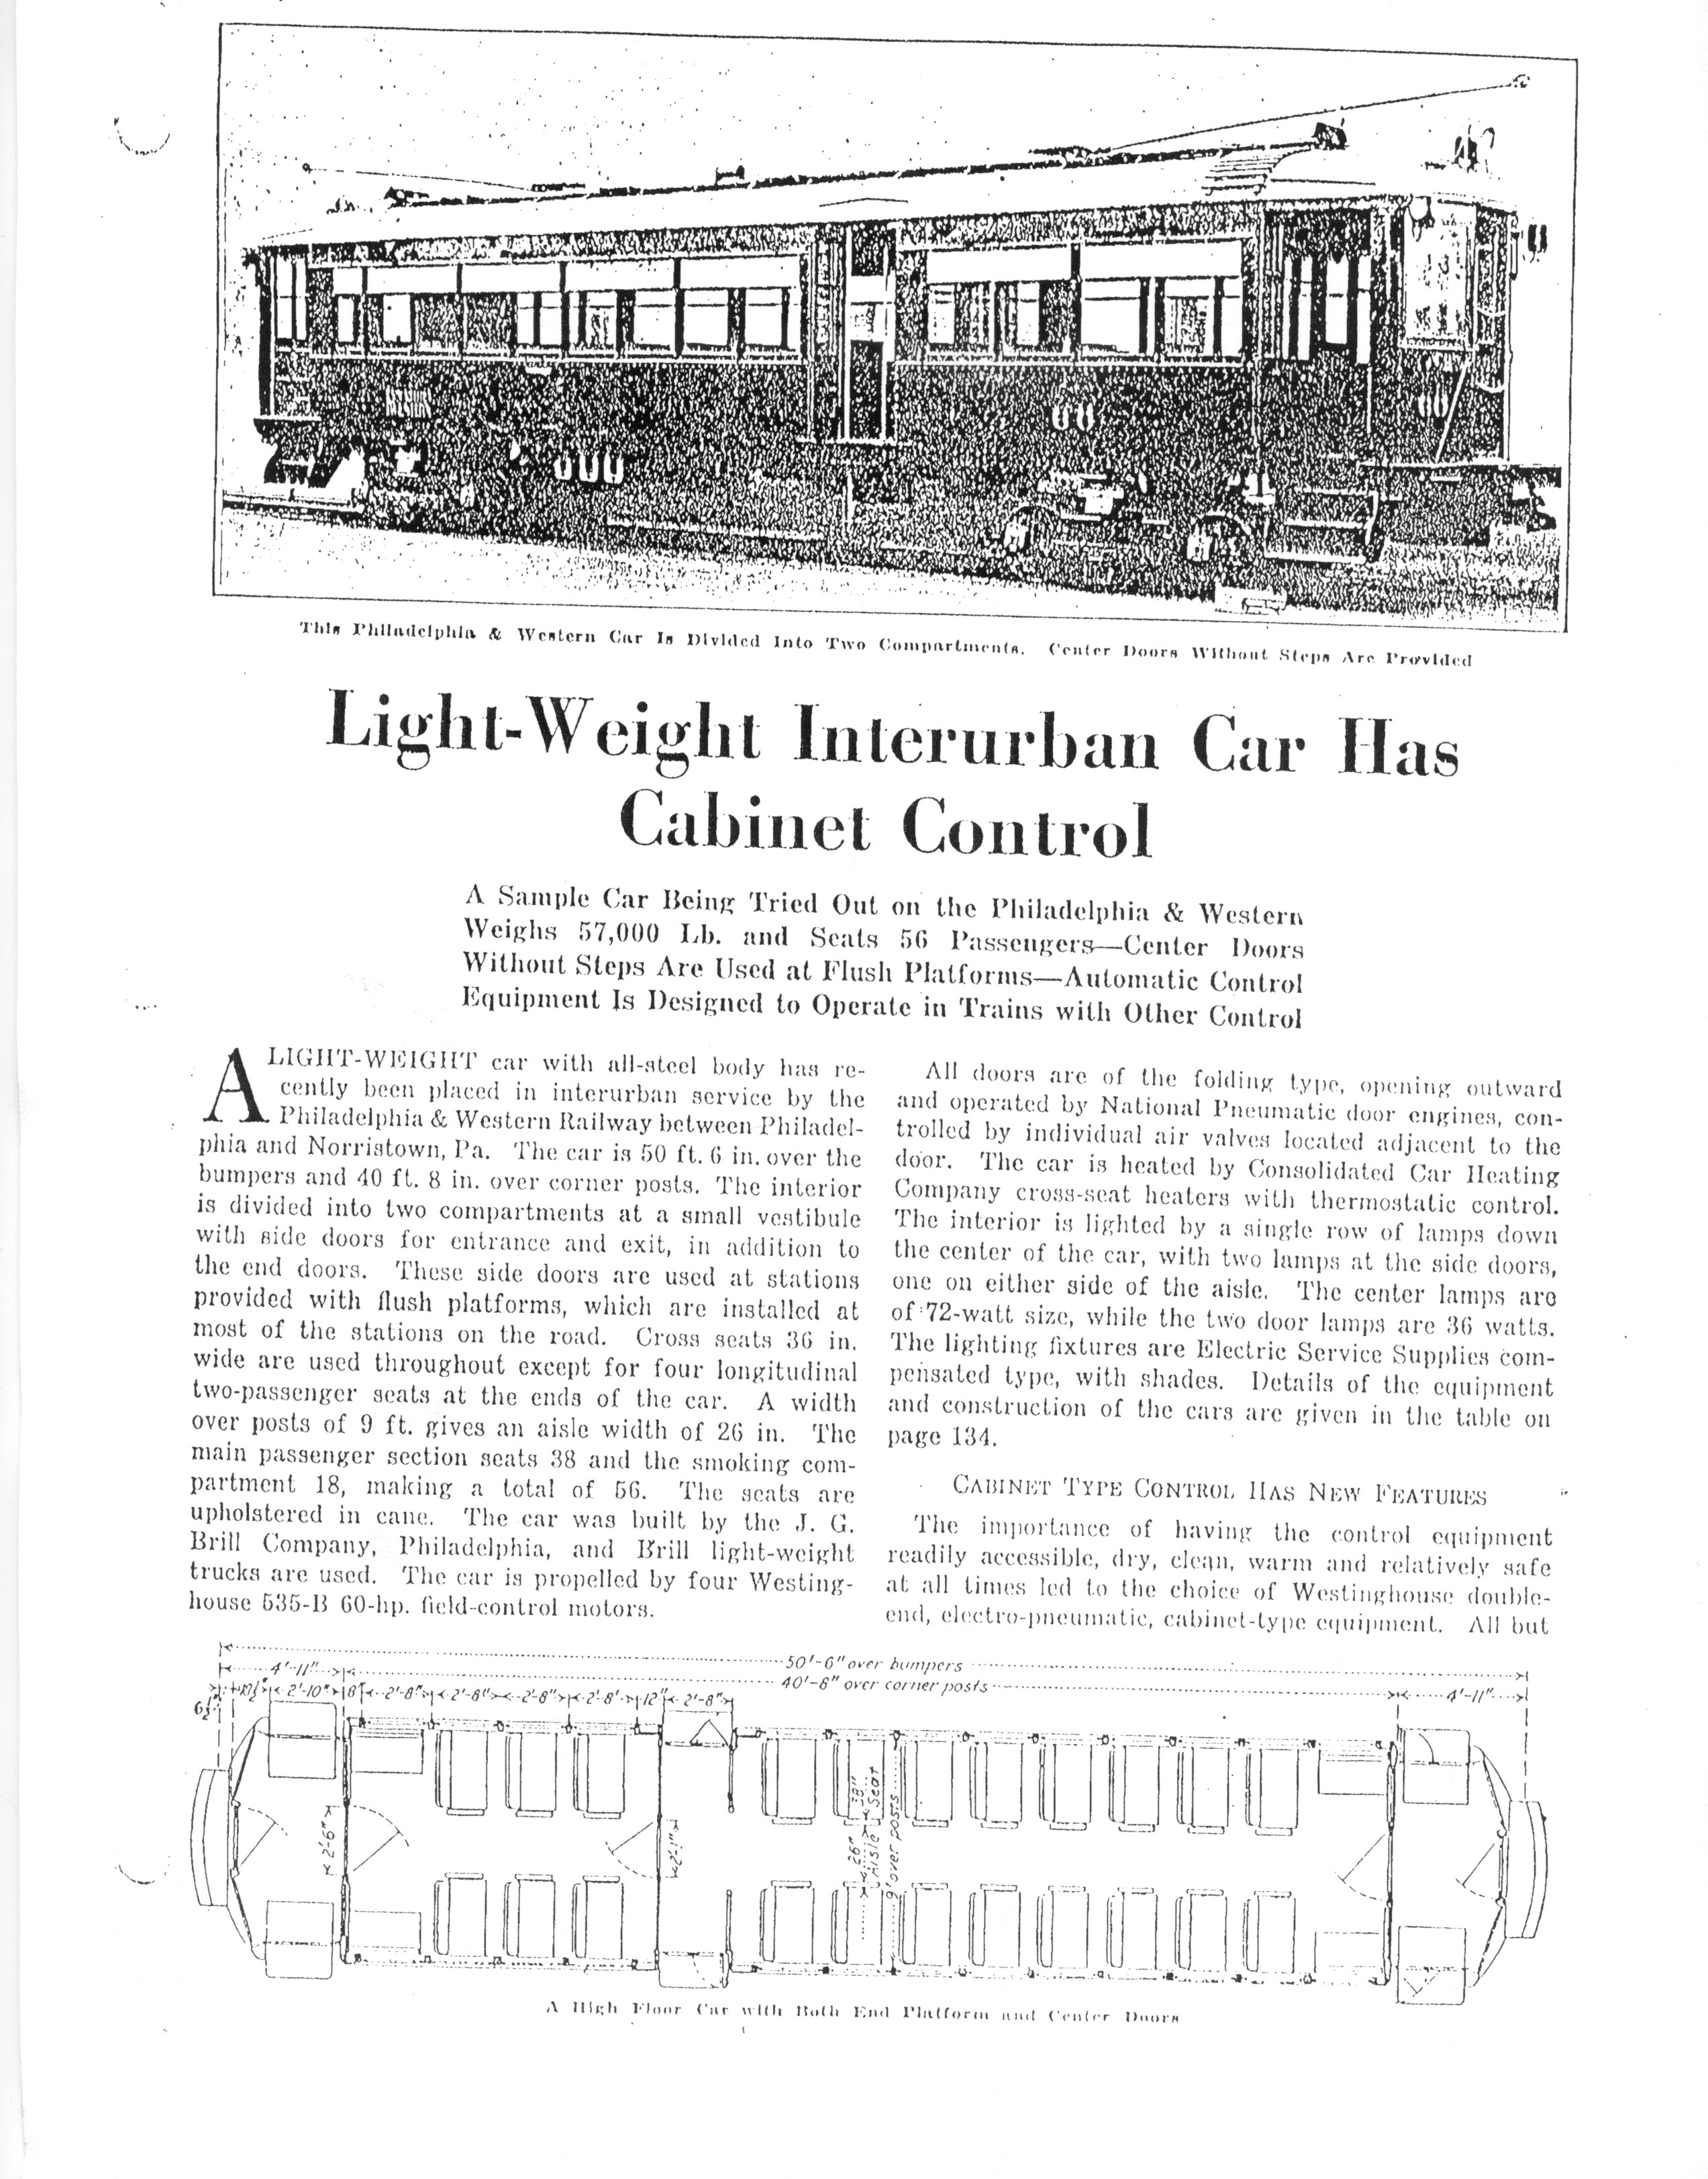 Electric Railway Journal Reprint